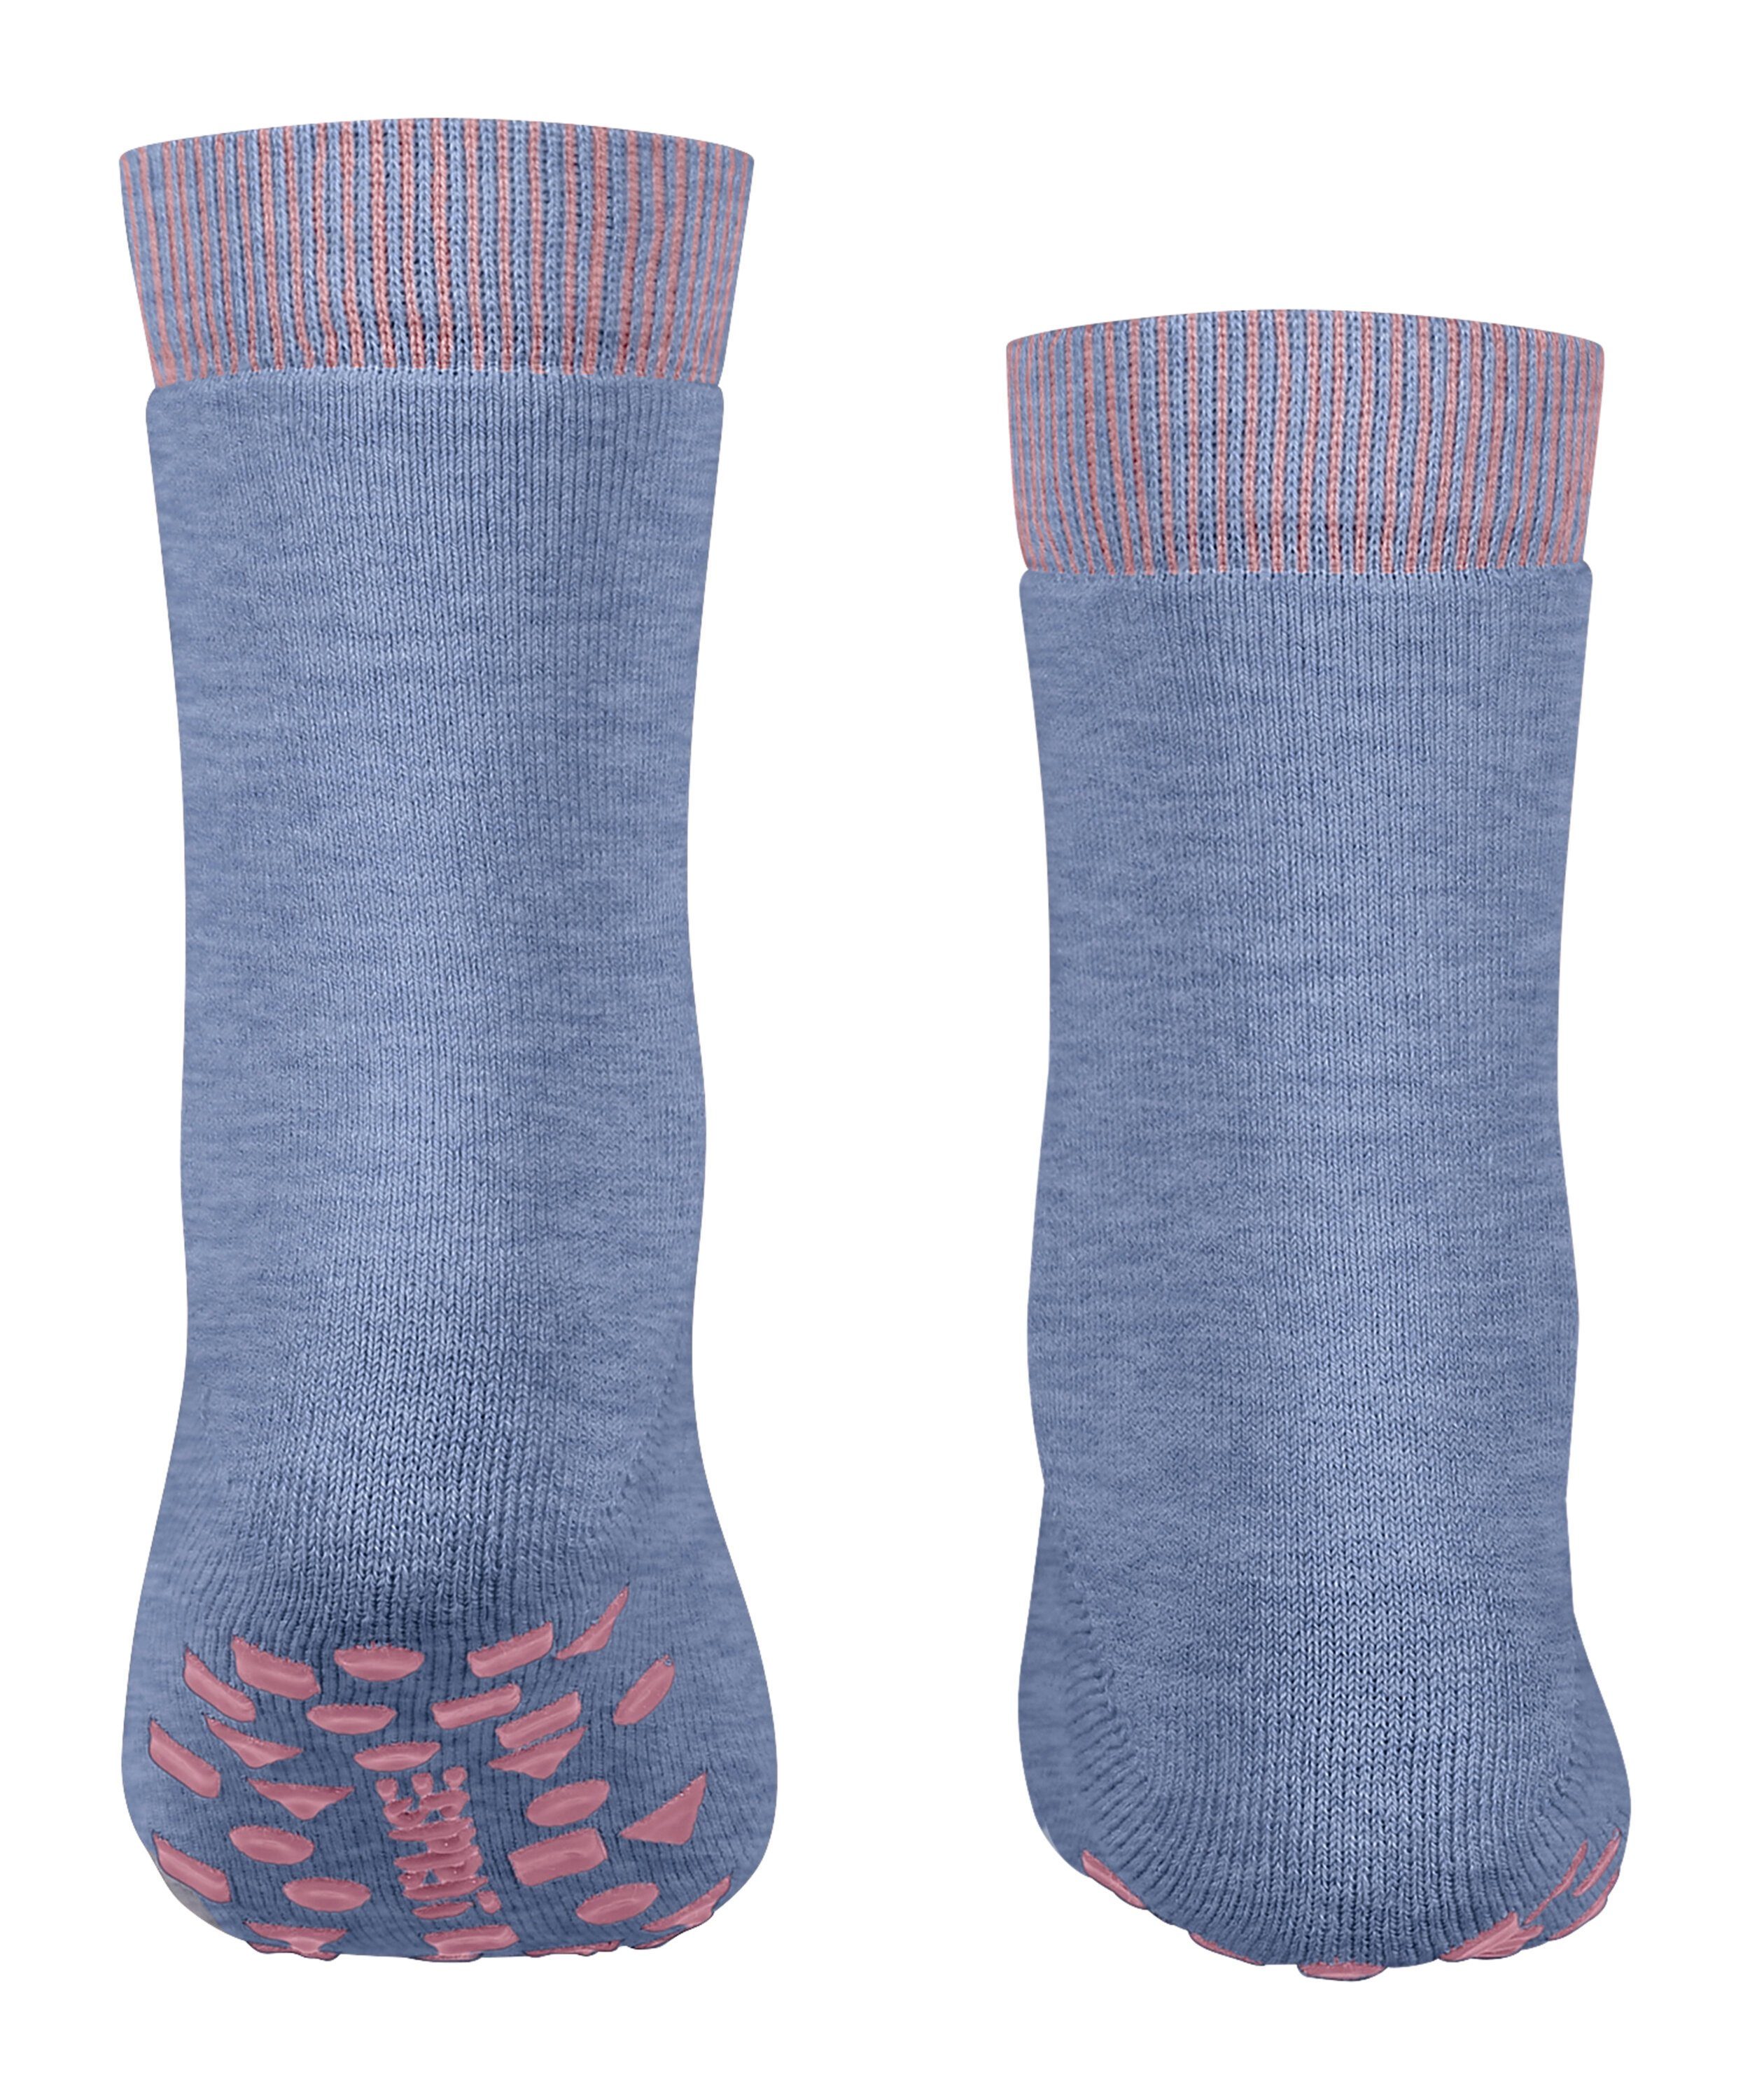 Esprit Foot jeans (6458) (1-Paar) Socken Logo